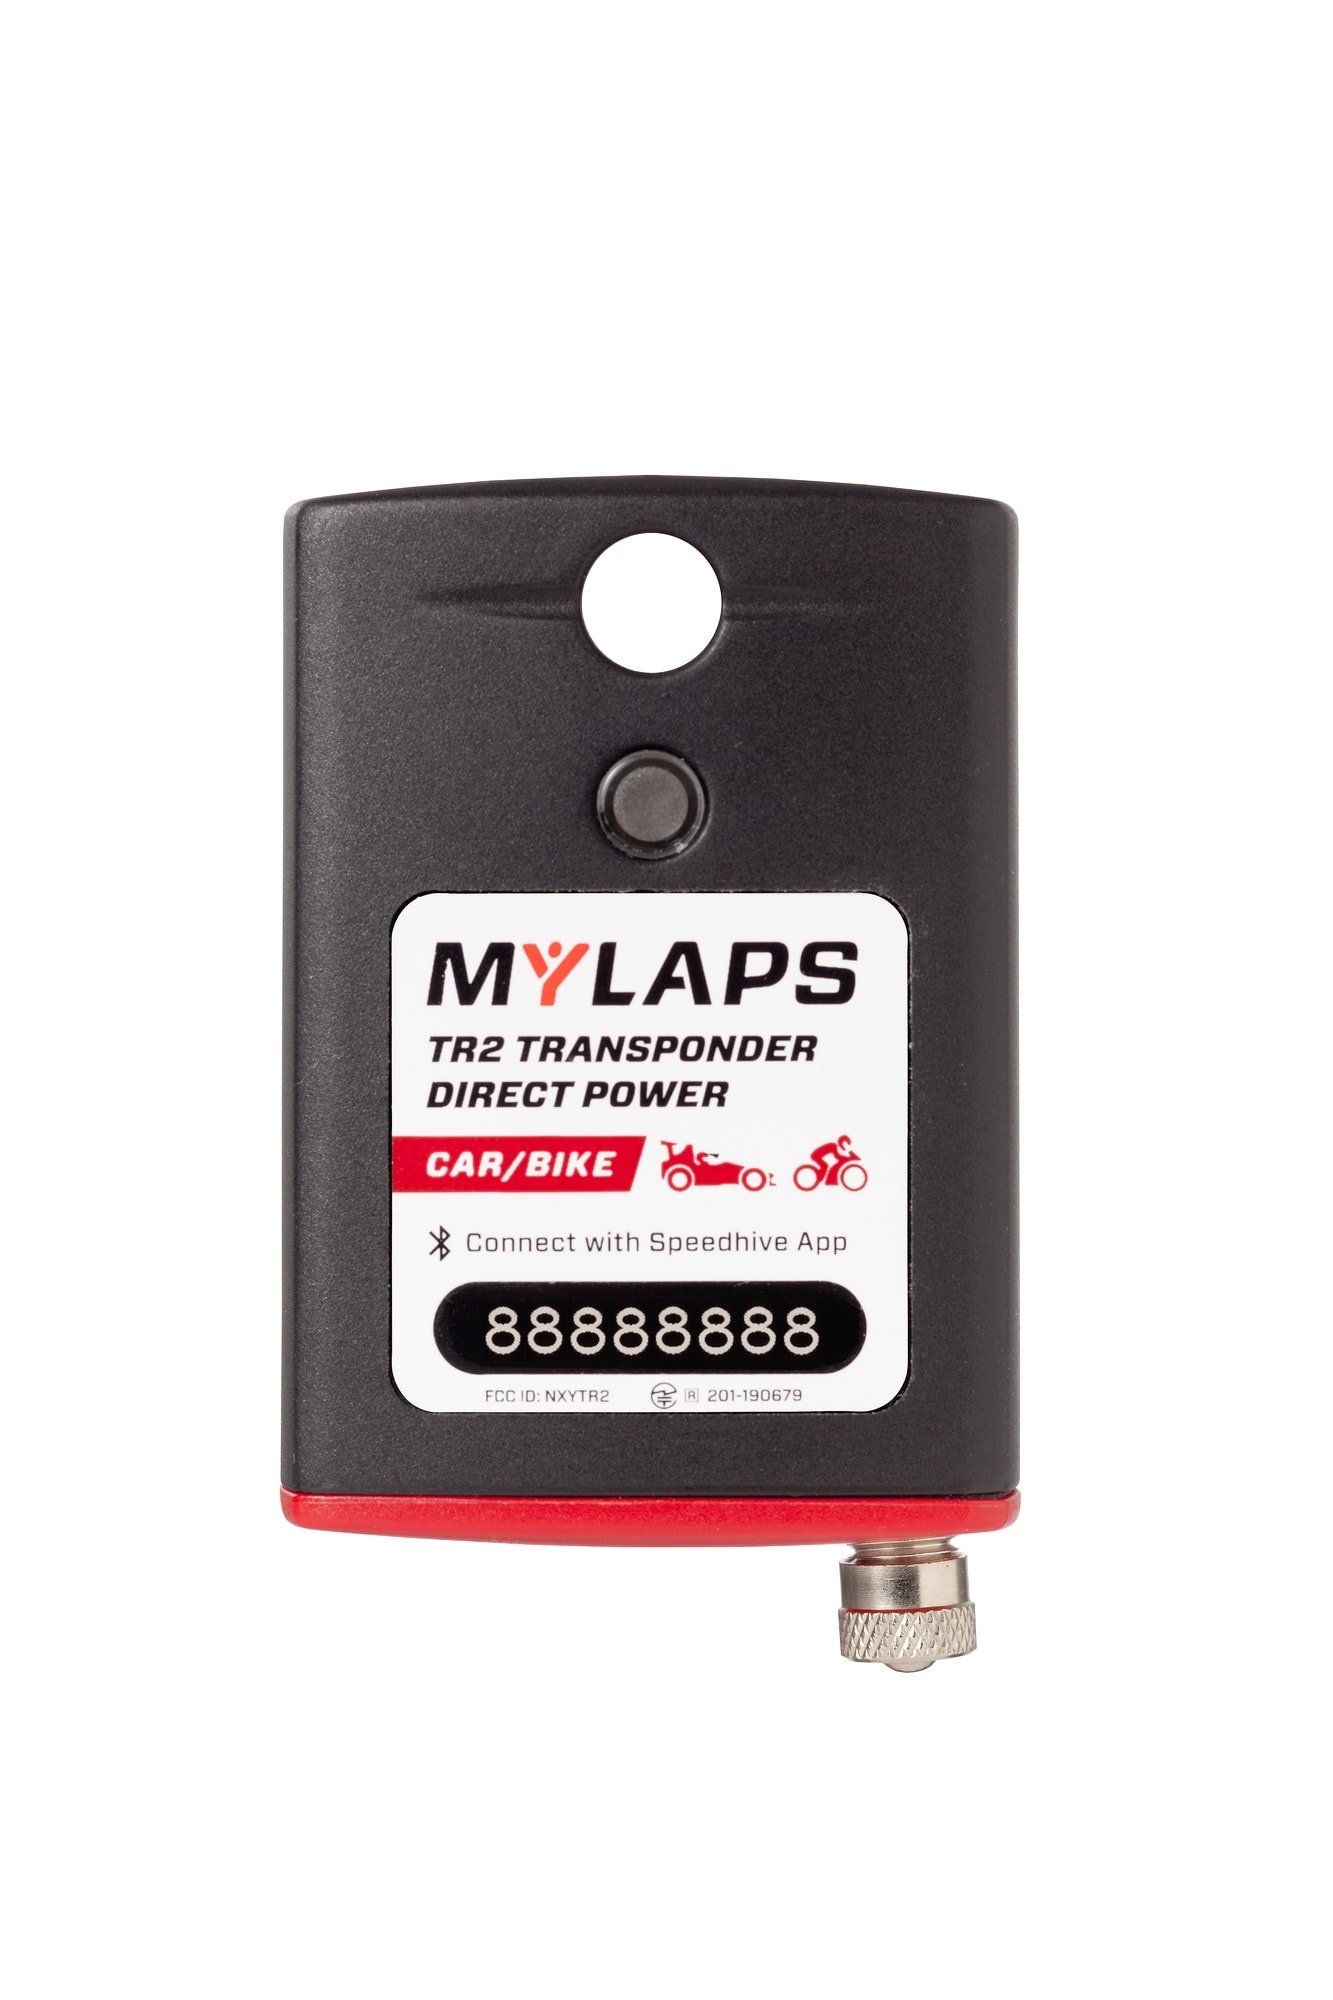 Transponder MyLaps TR2 Car/MC Direct Power 5 year